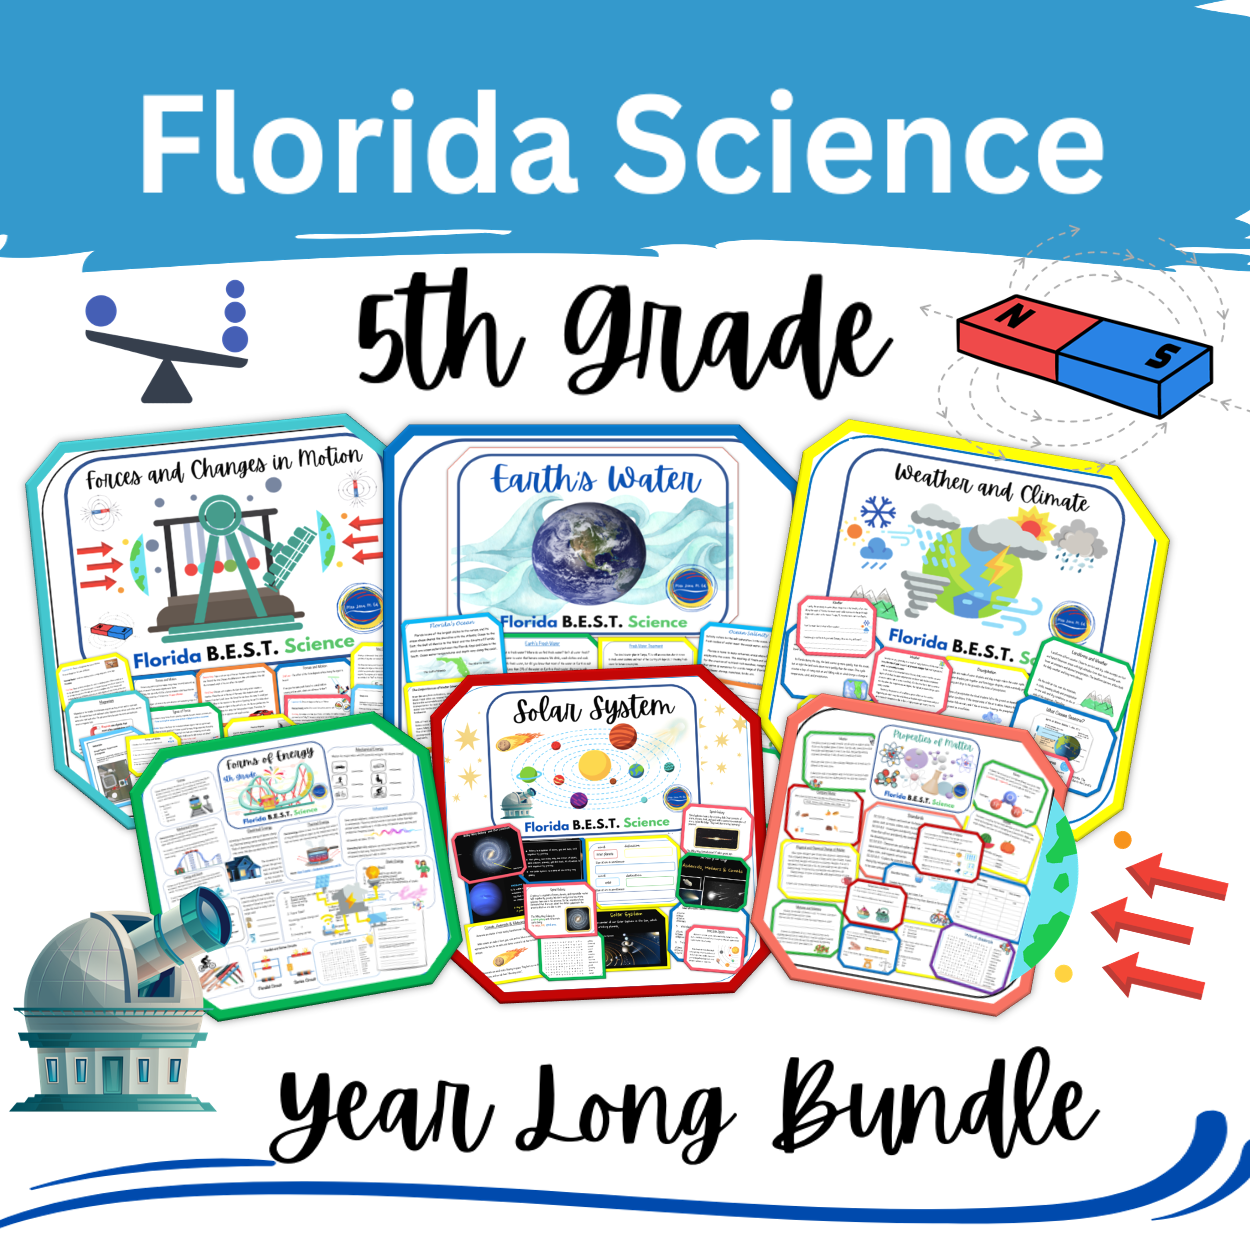 5th Grade Florida B.E.S.T. Science Year Long Bundle

